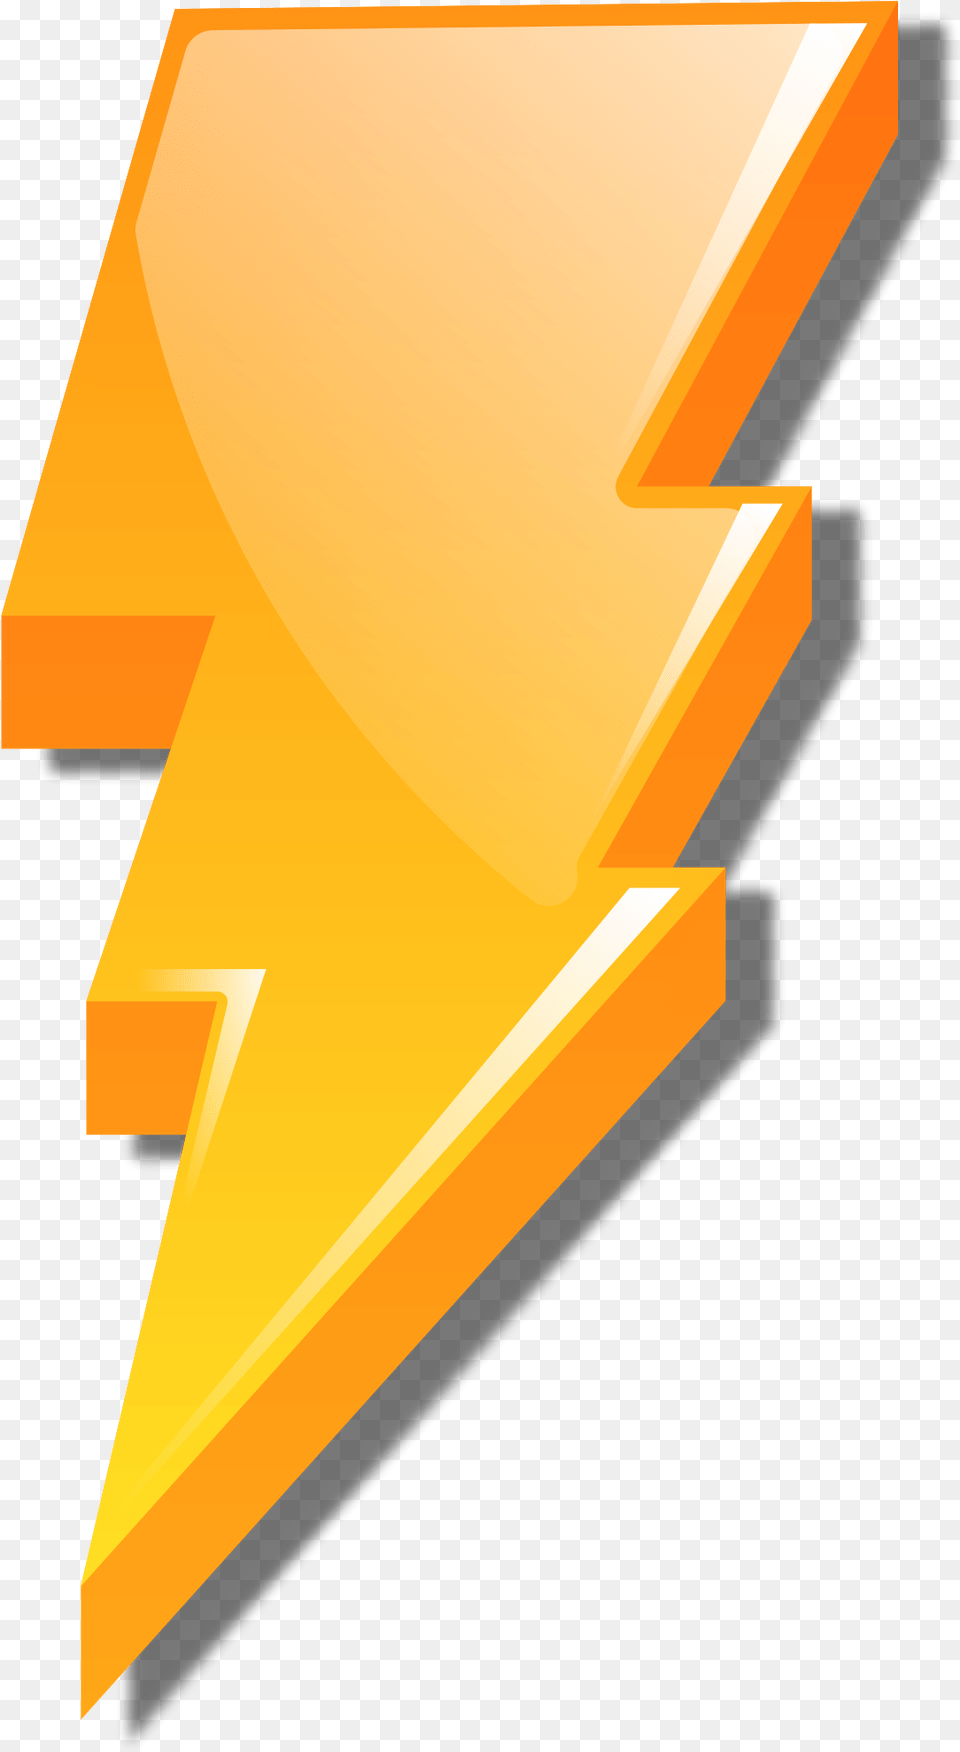 Open Power Rangers Lightning Bolt, Weapon Free Transparent Png